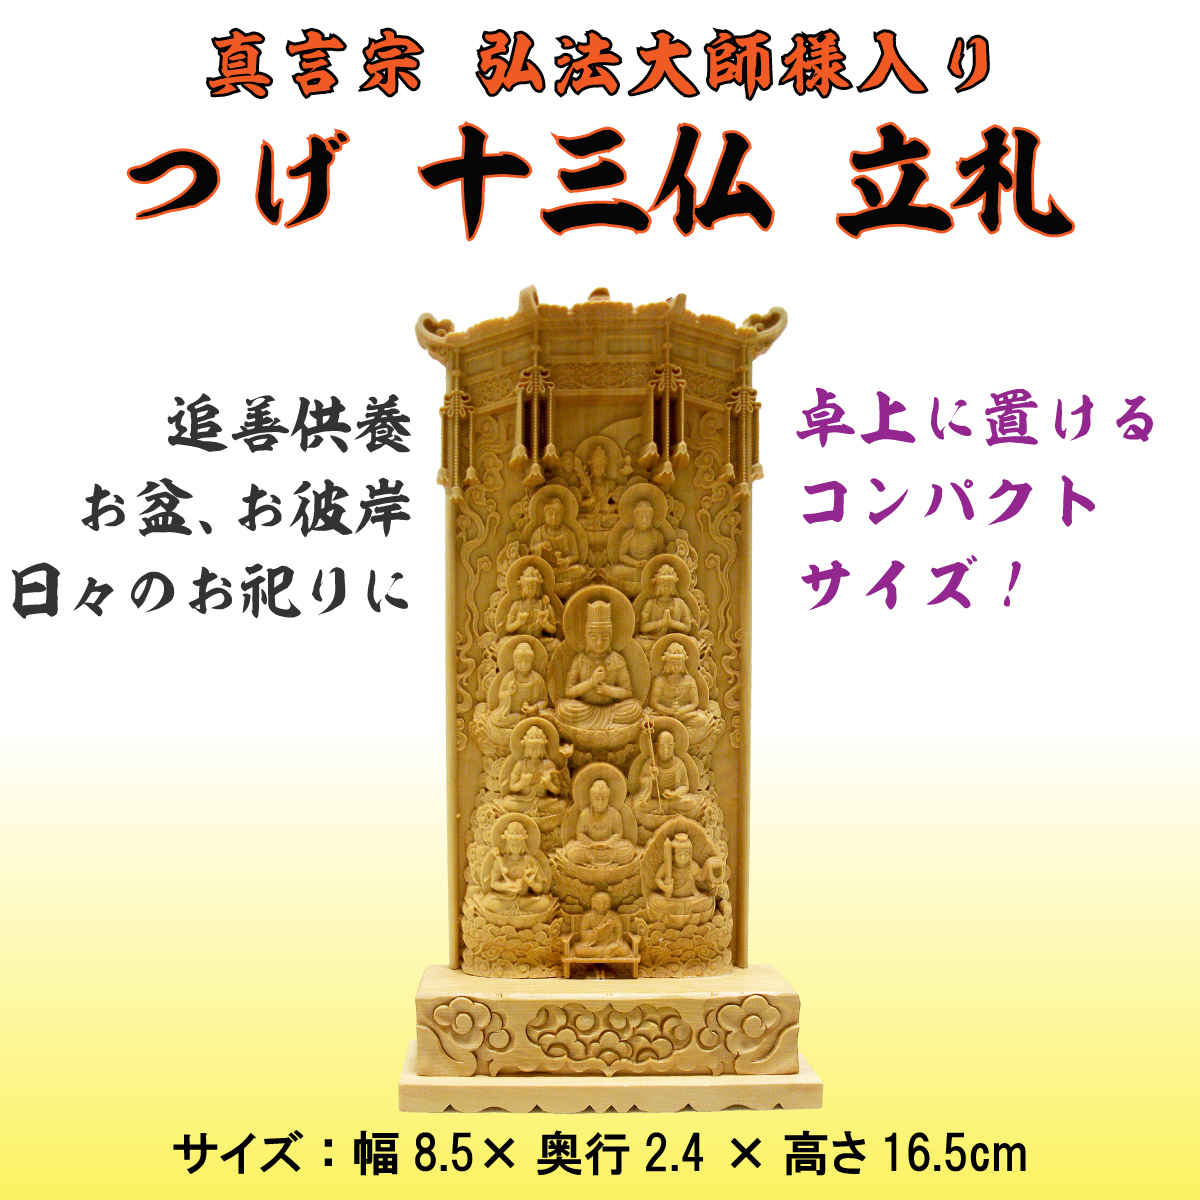 十三仏 木彫 仏像 真言宗 弘法太師入り 立札 黄楊材 上彫り仕上げ 高さ16.5cm